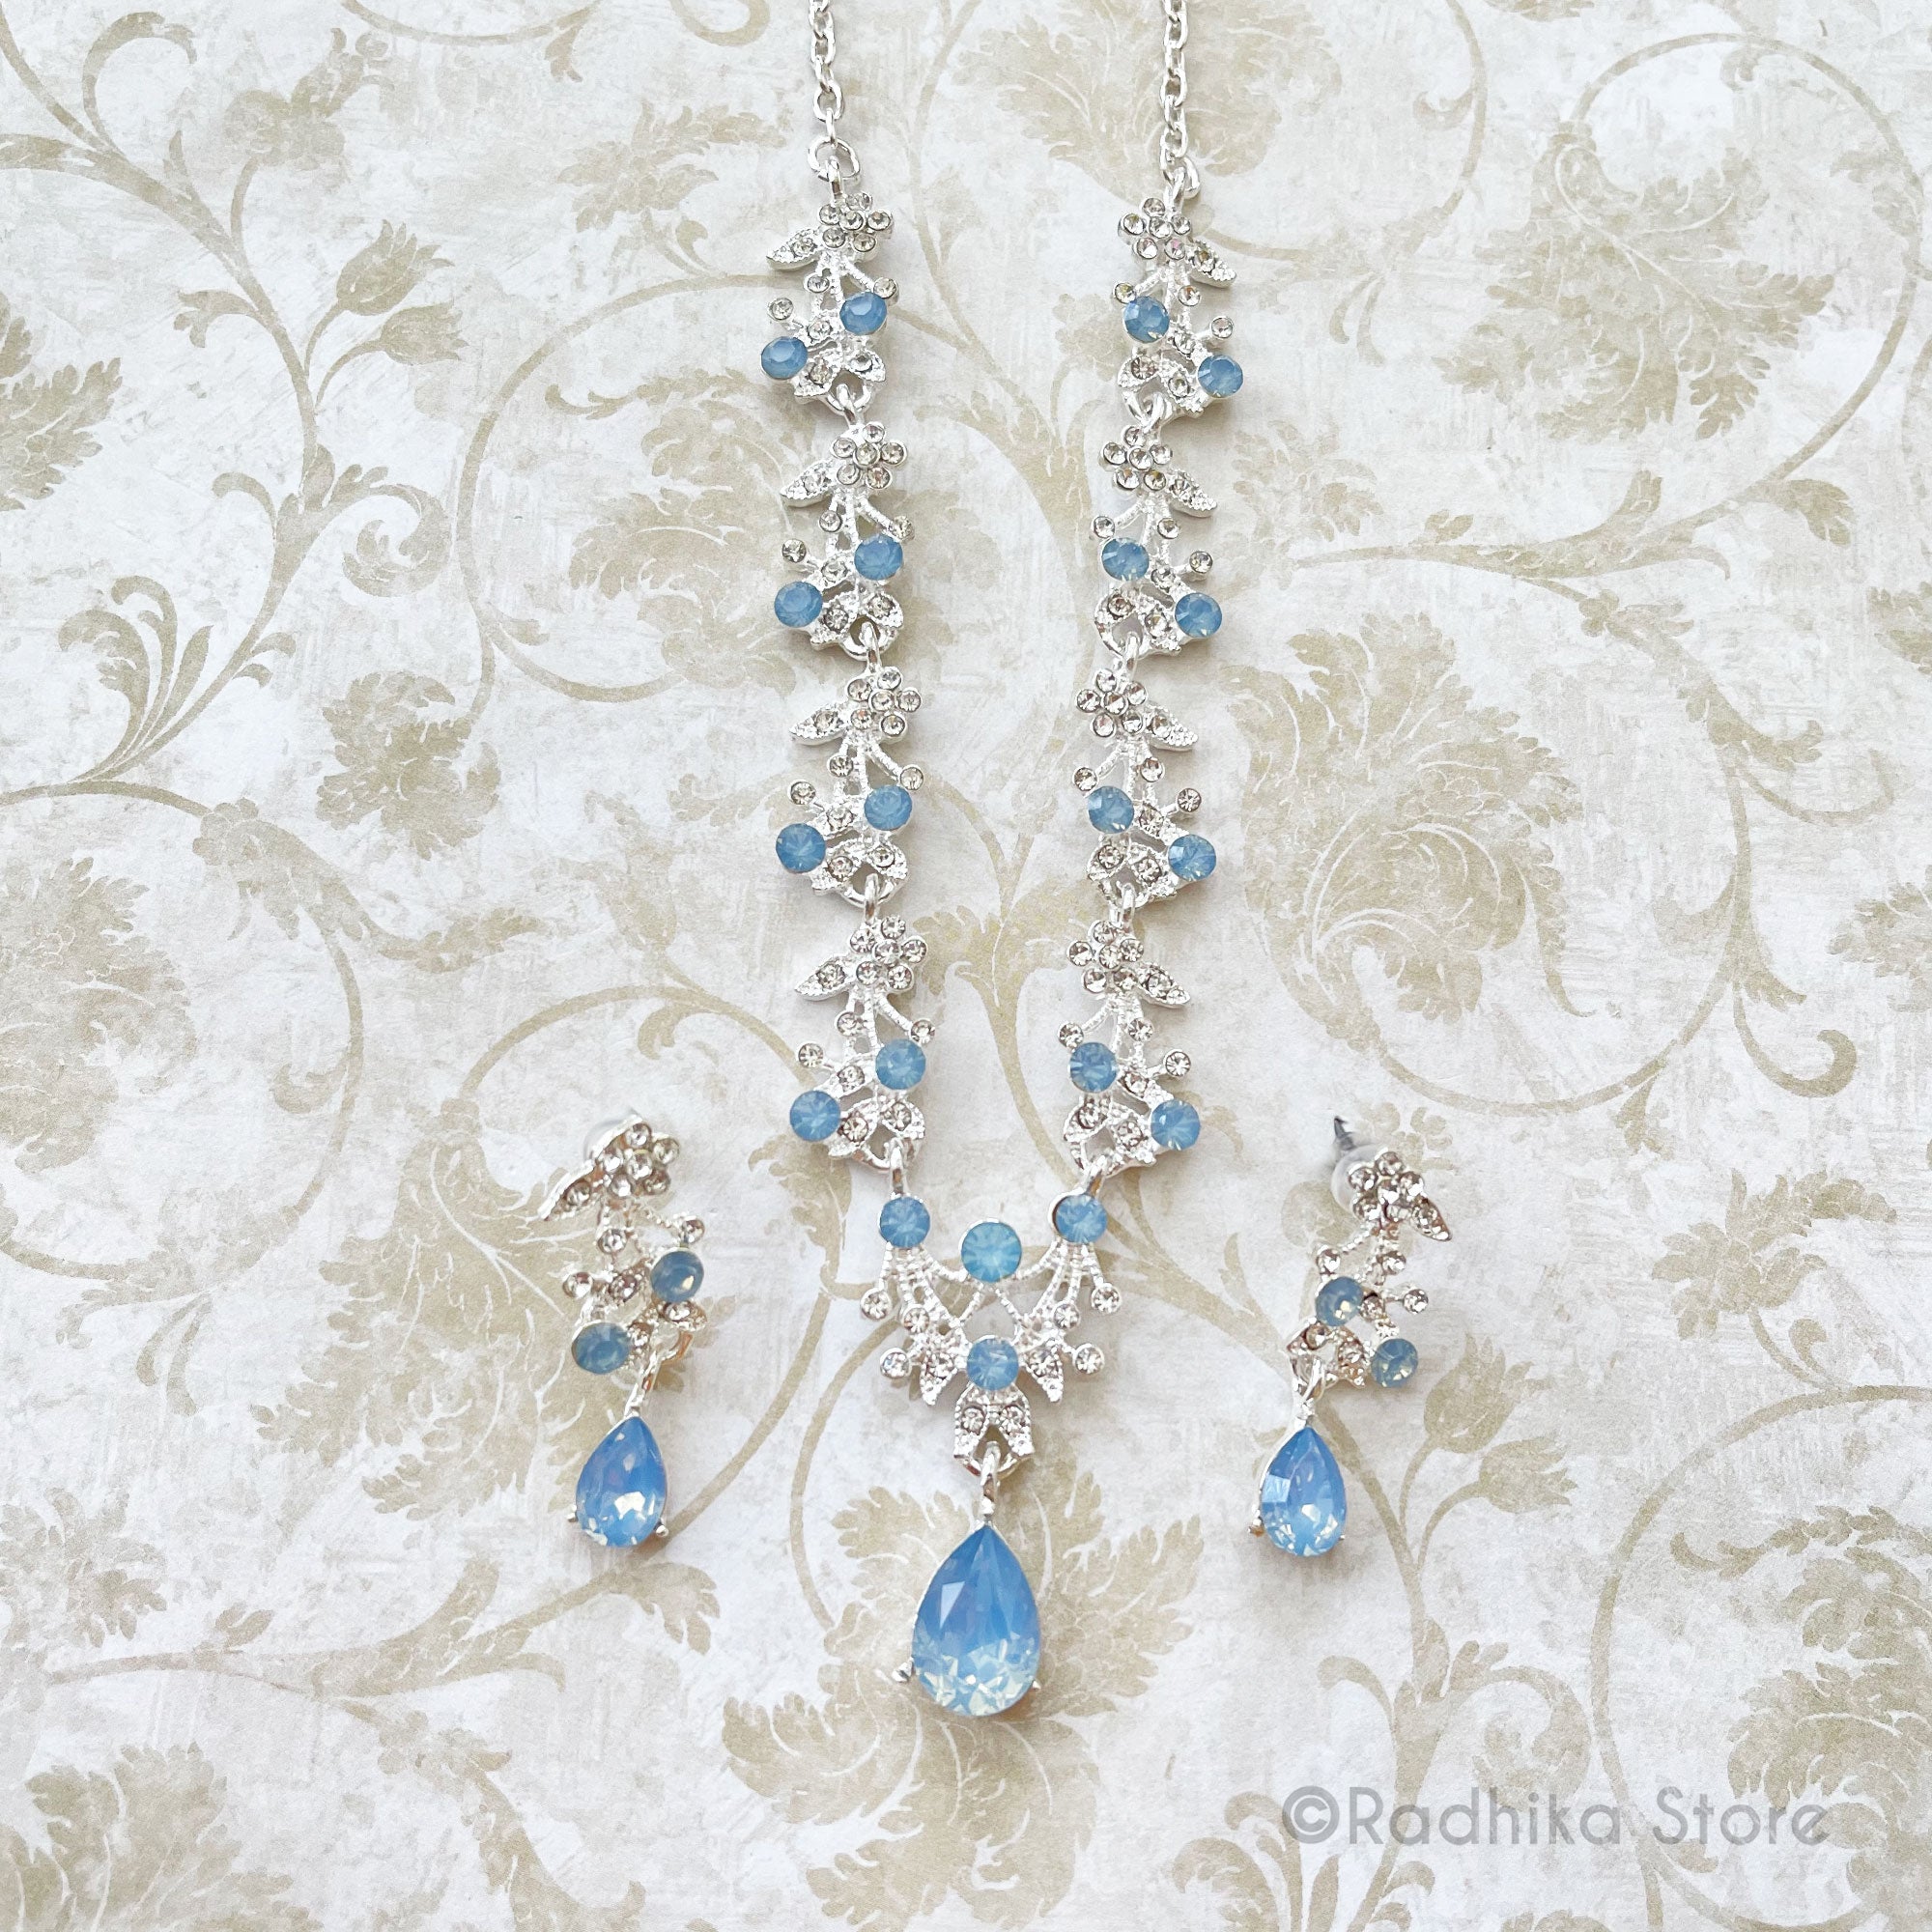 Vrindavan Dew Drops-Rhinestone Deity Necklace And Earring Set-Krishna Blue